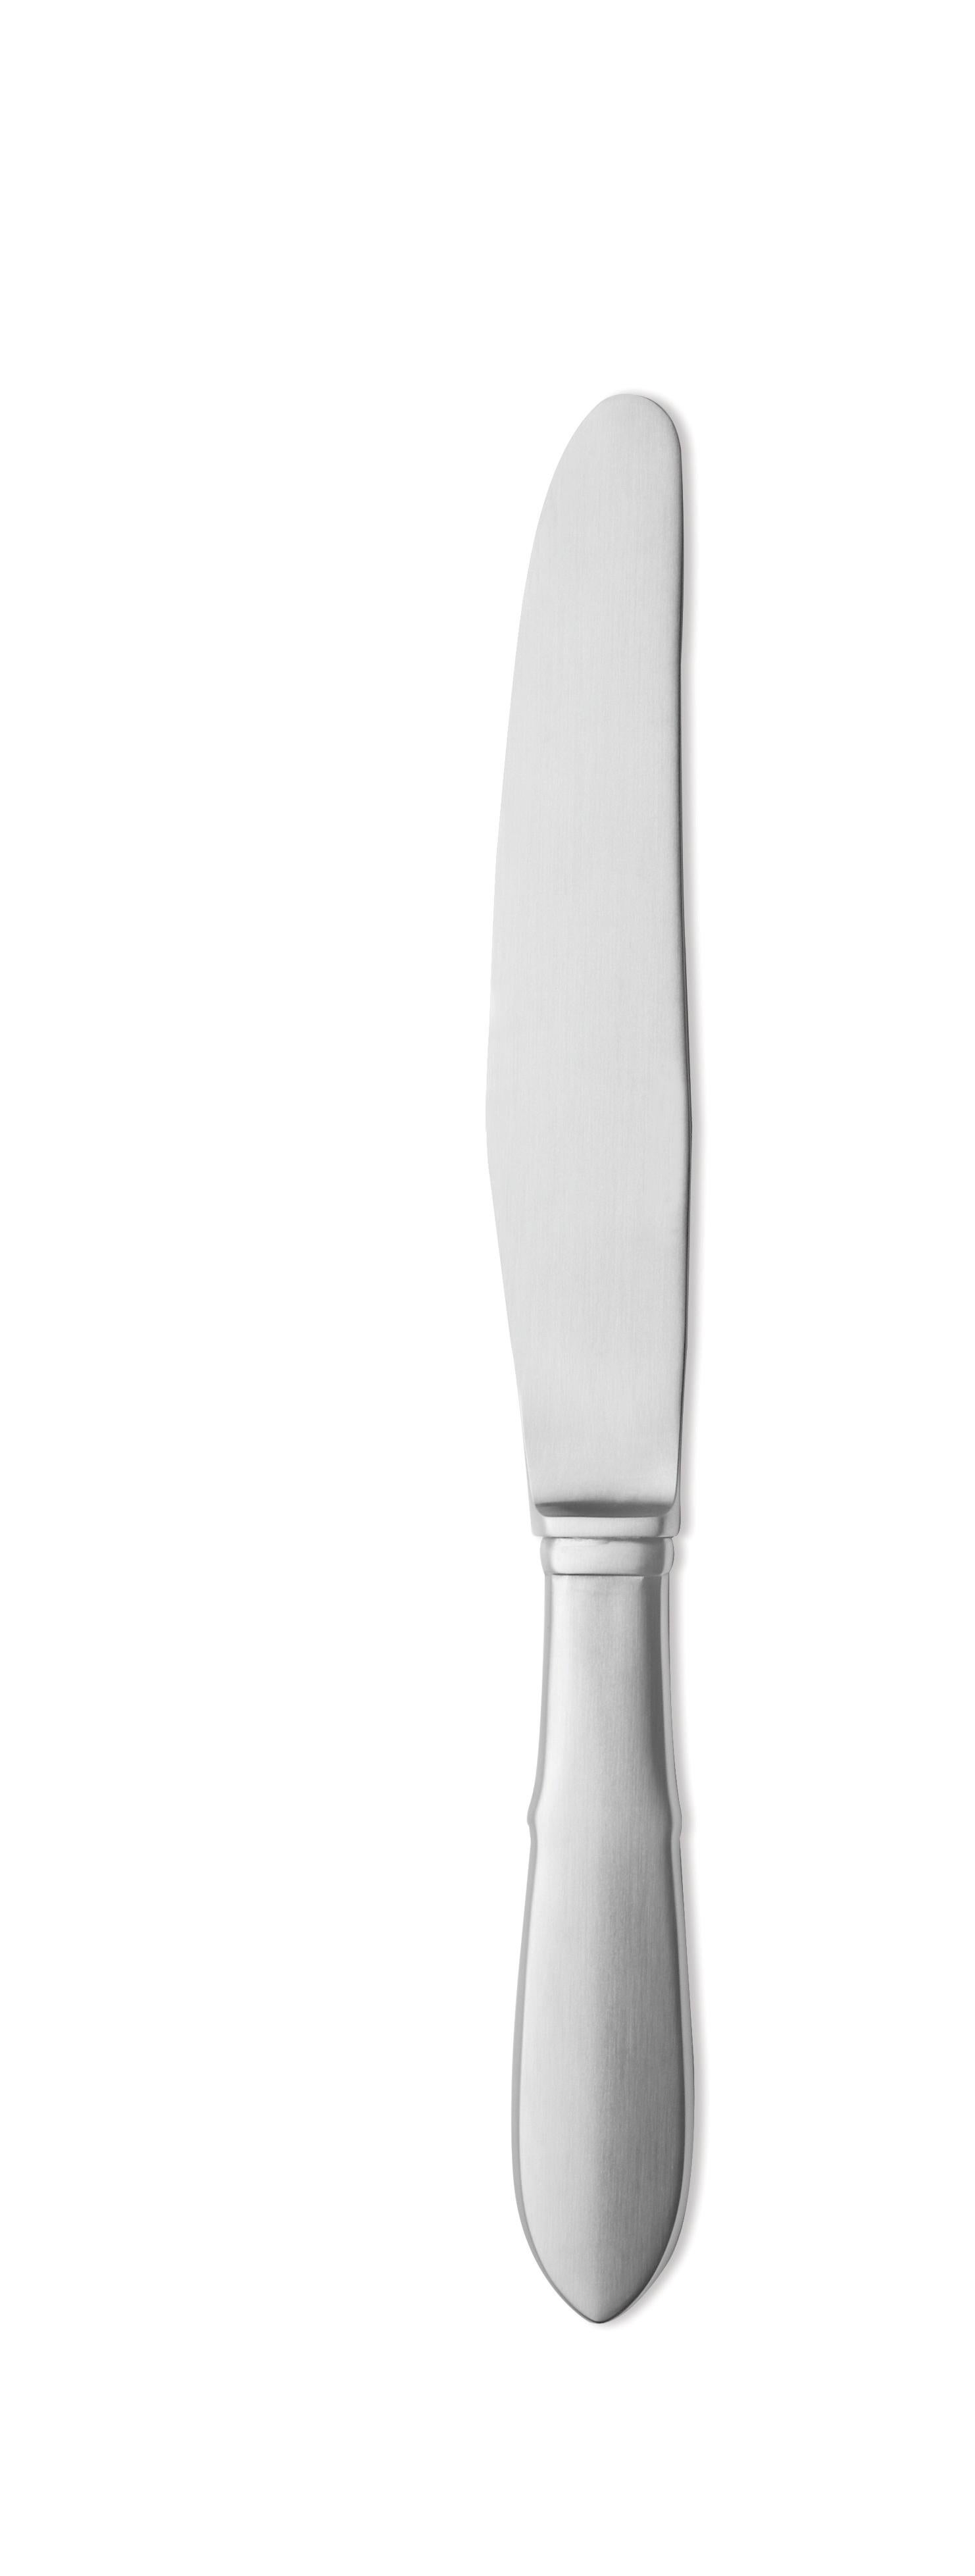 Modern Georg Jensen Mitra Large Dinner Knife in Stainless Steel by Gundorph Albertus